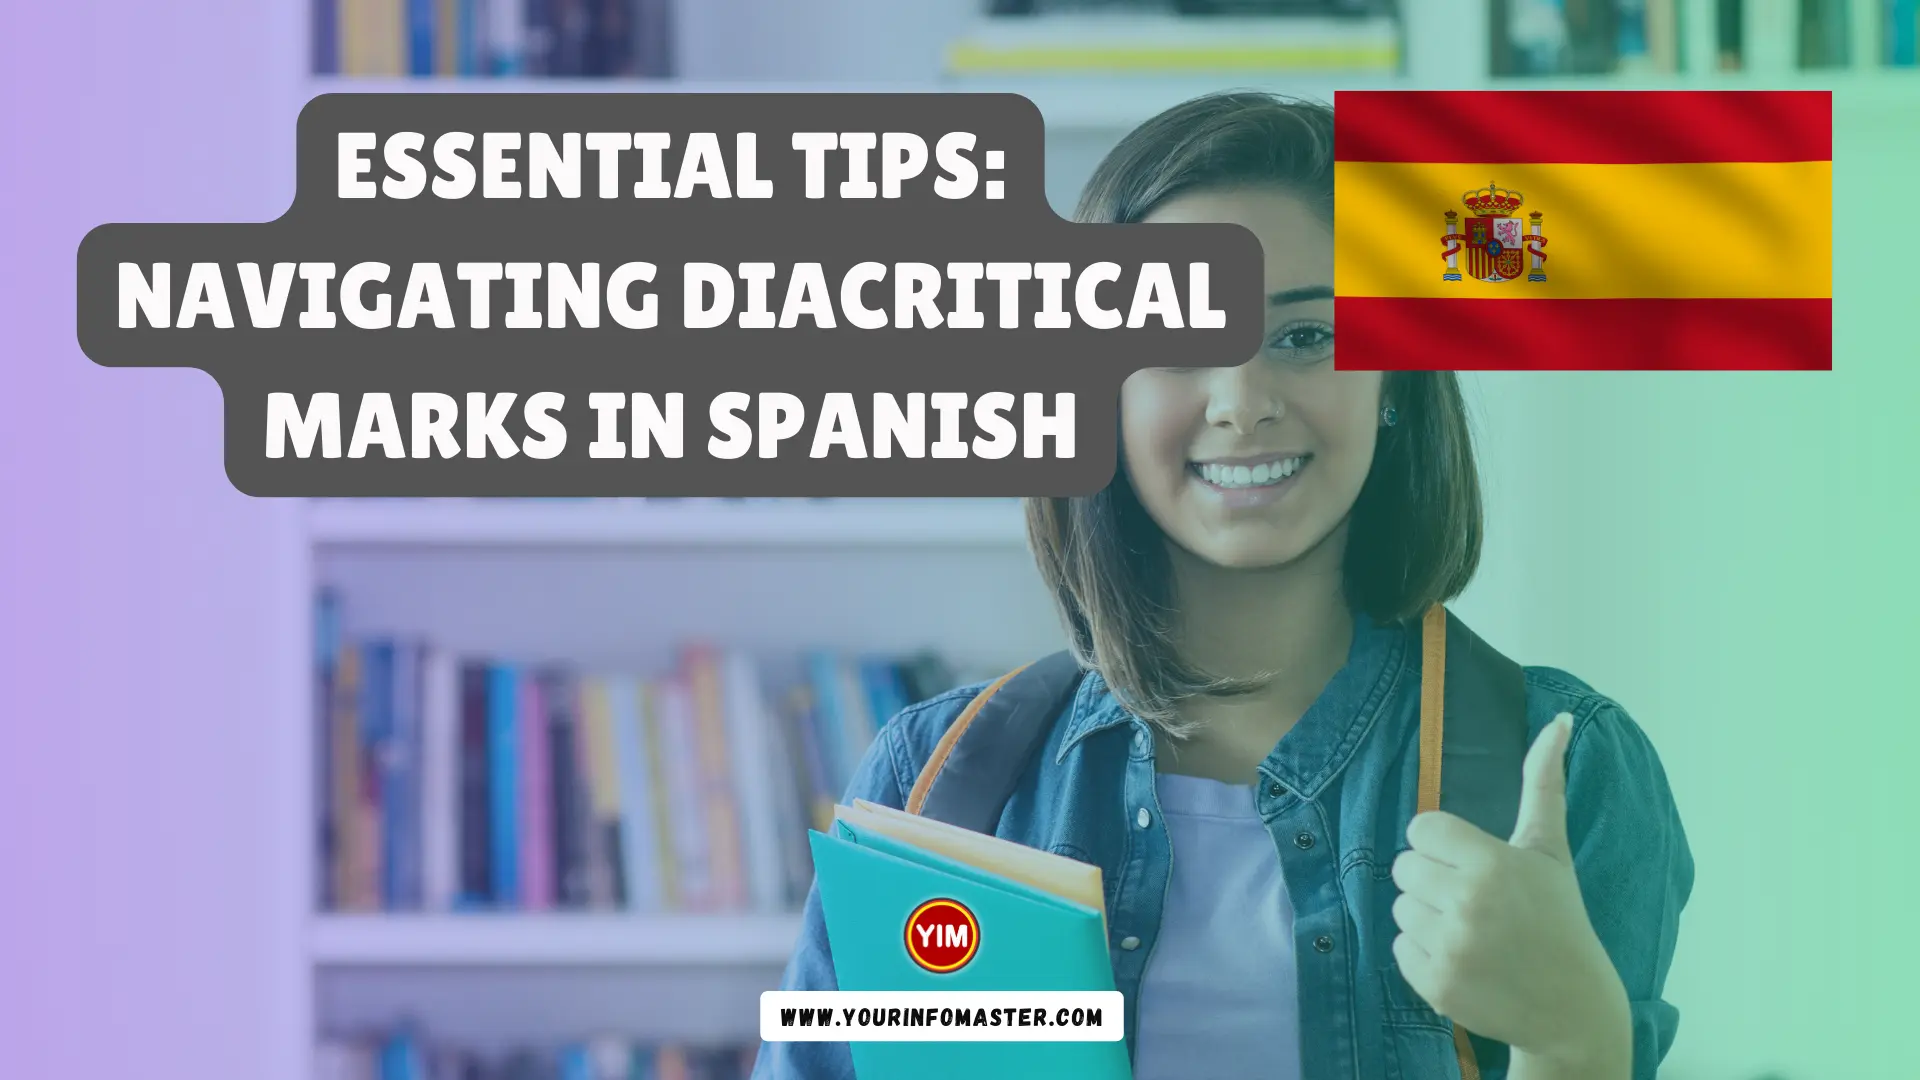 Diacritical Marks in Spanish